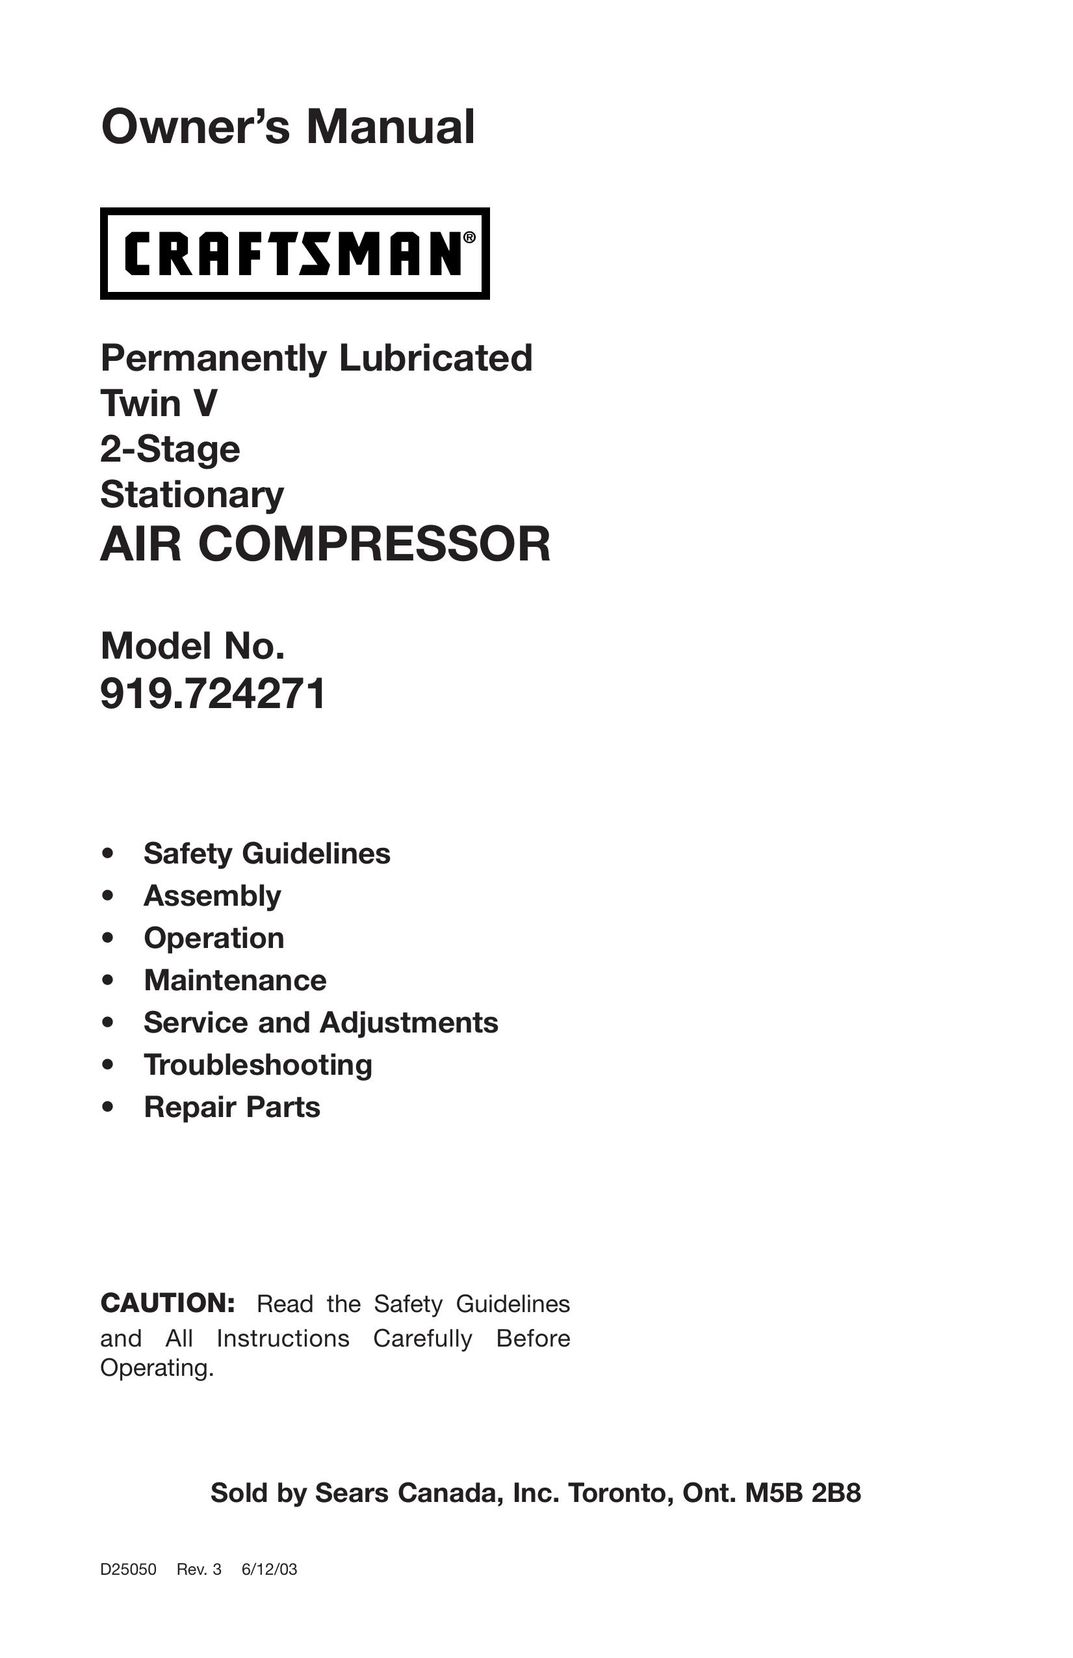 Craftsman 919.724271 Air Compressor User Manual